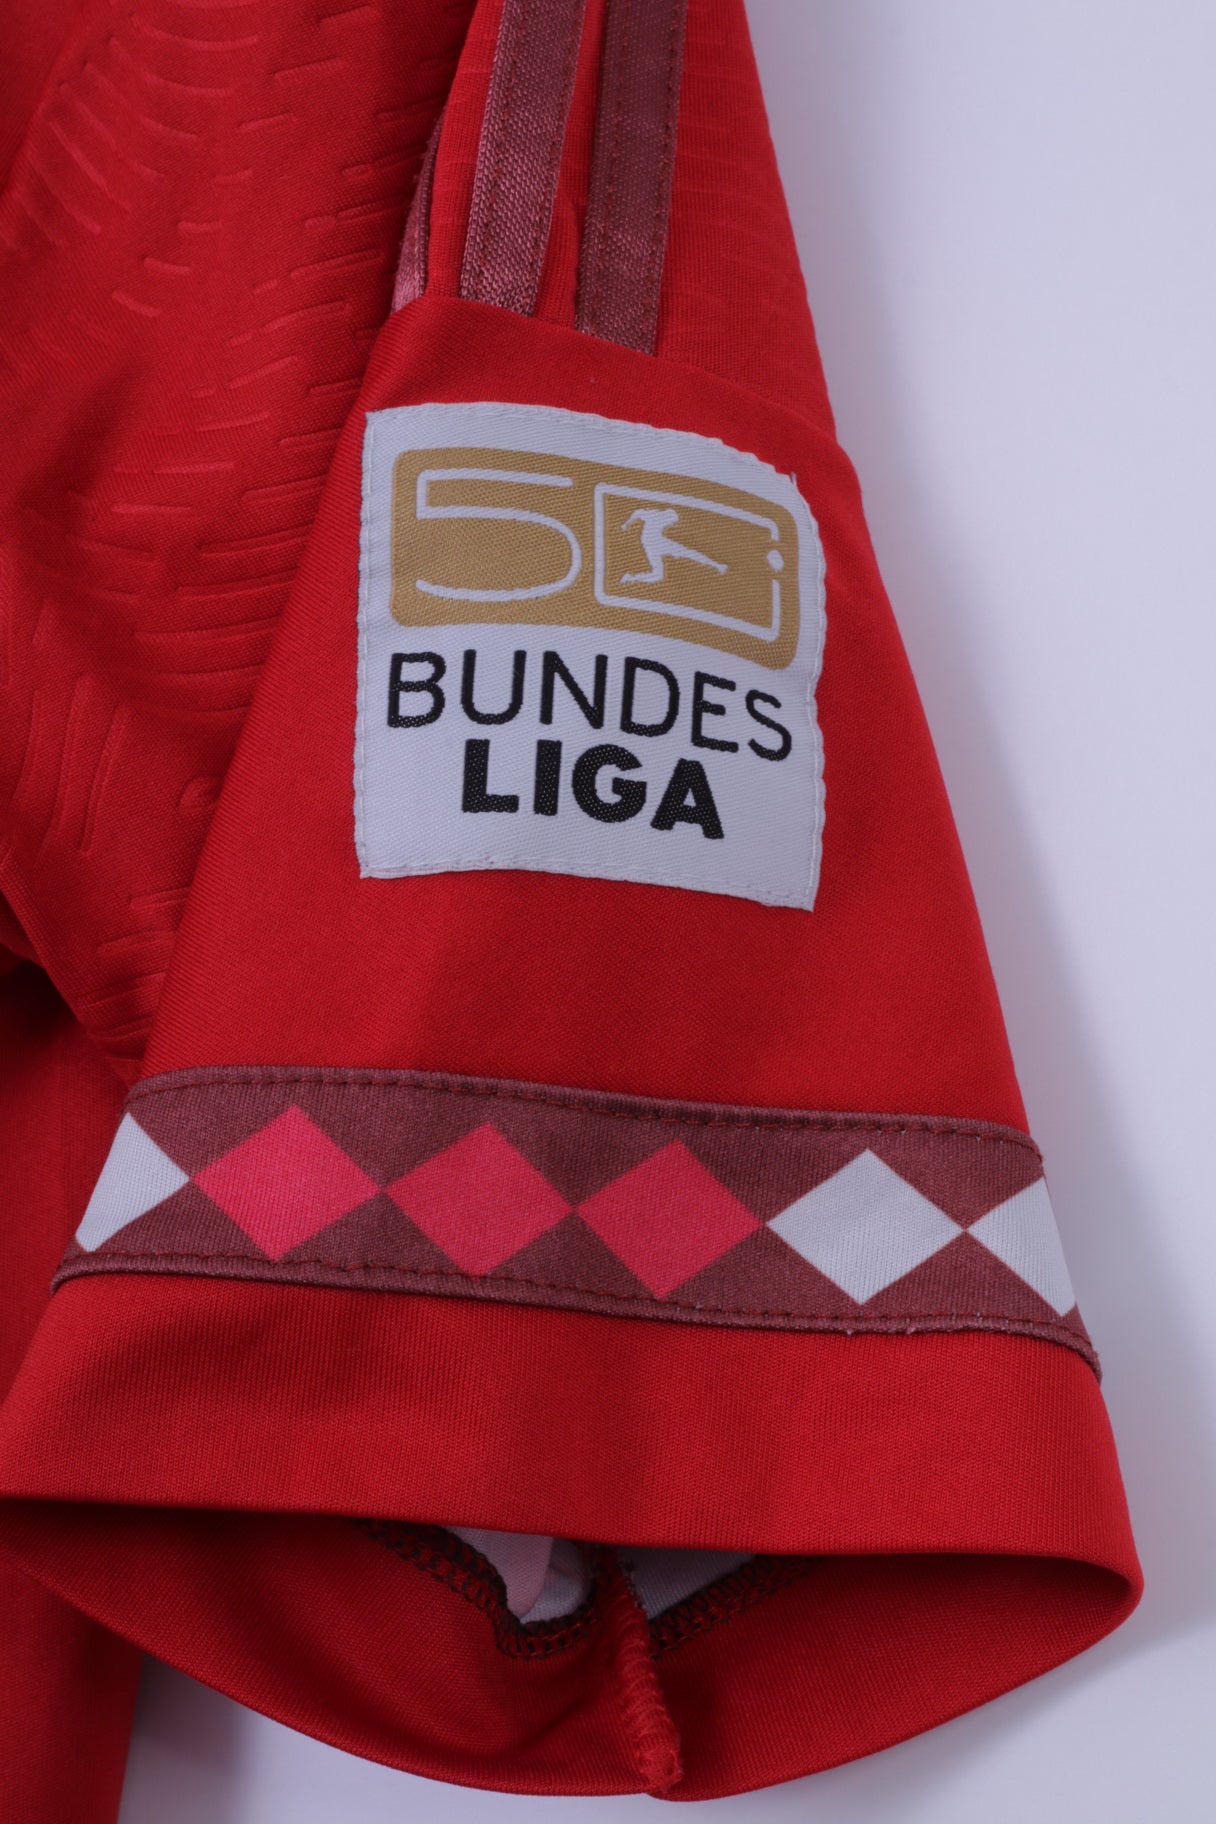 Adidas Womens 10 M Shirt red Bayern Munchen Football #7 Ribery Jersey Top